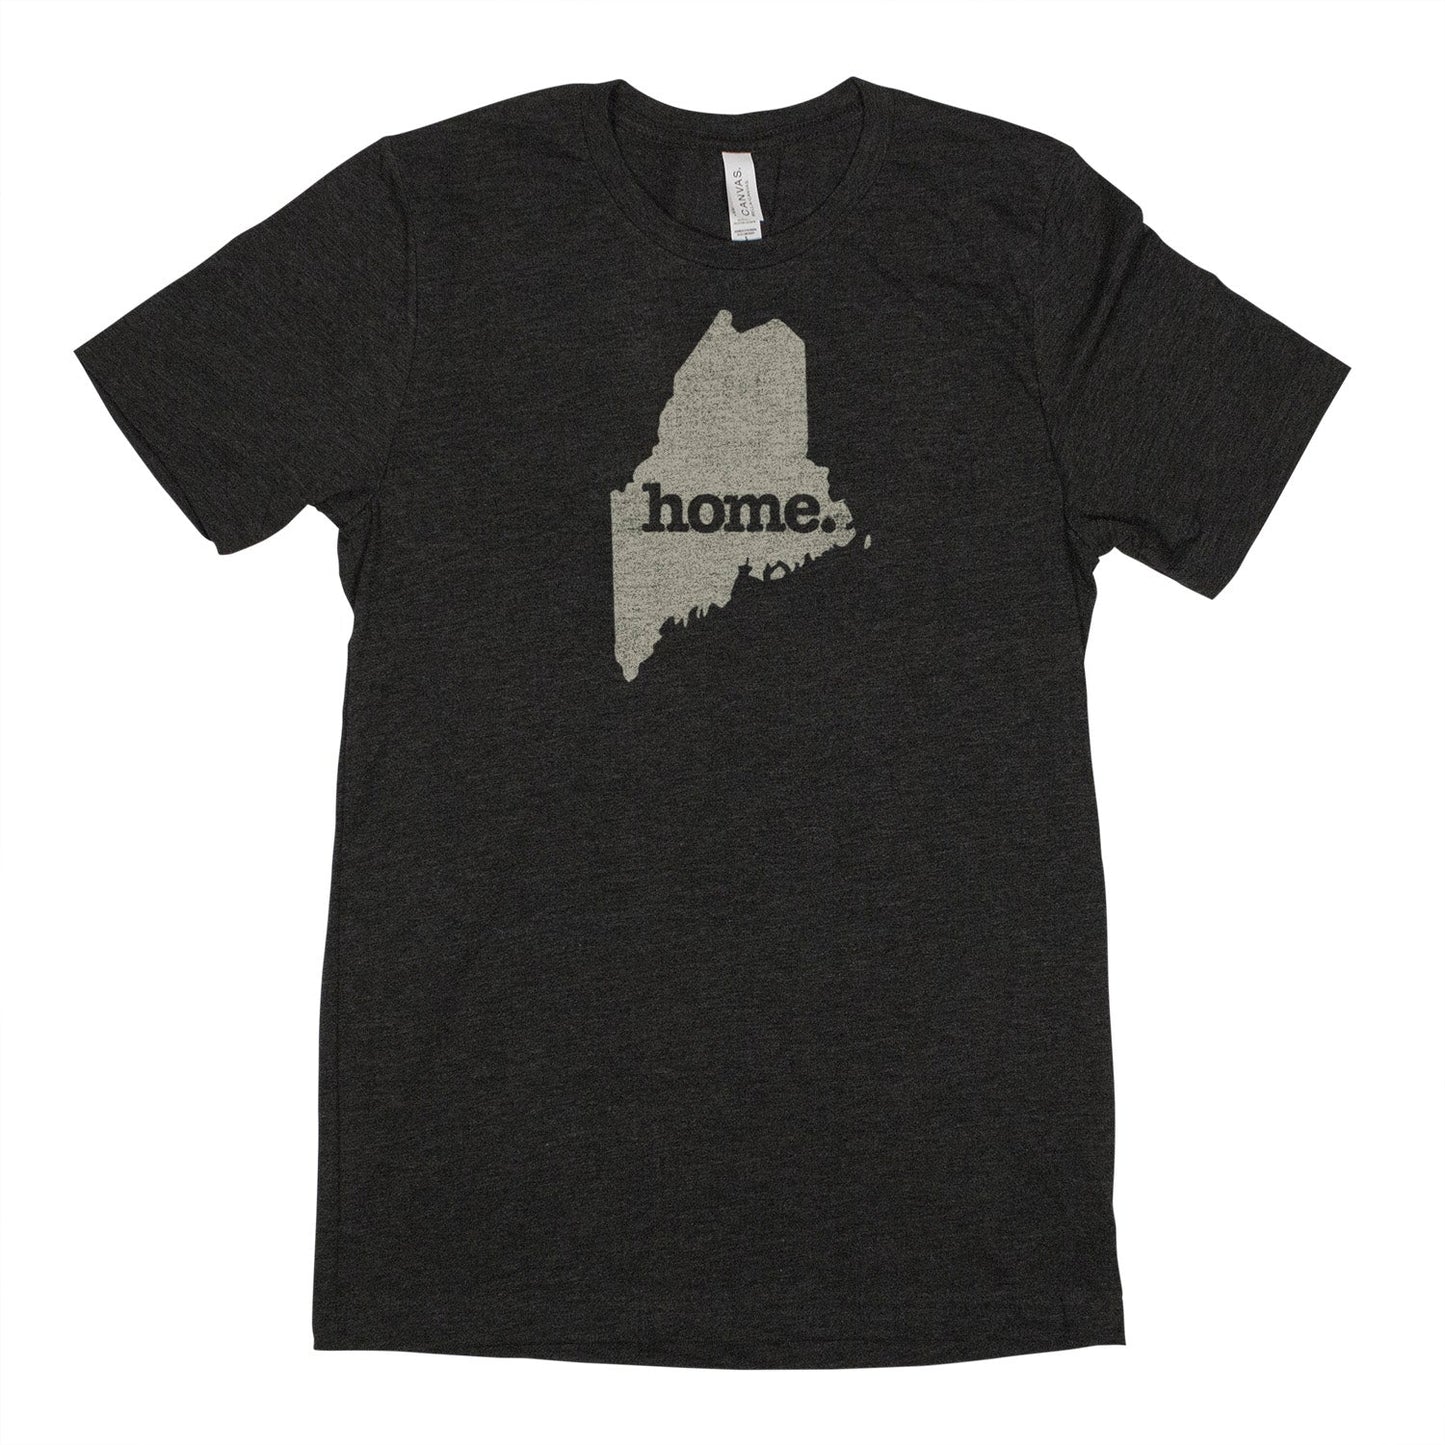 home. Men’s Unisex T-Shirt - Maine